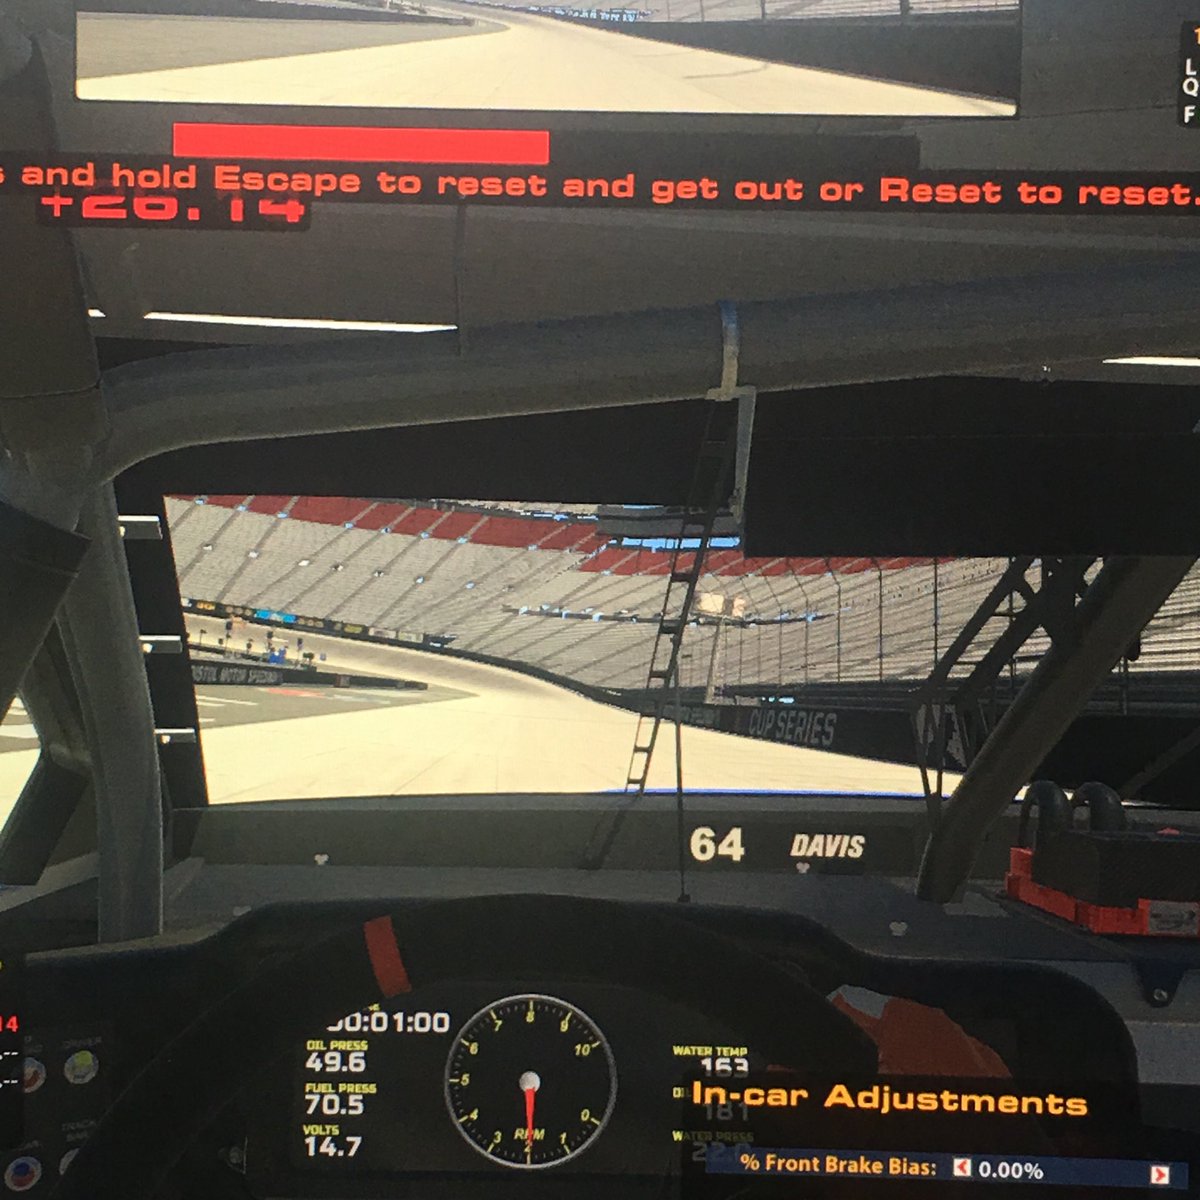 RT @DylanDa10543878: I’m going fast at Bristol motor Speedway https://t.co/Ww4cJLyXuy